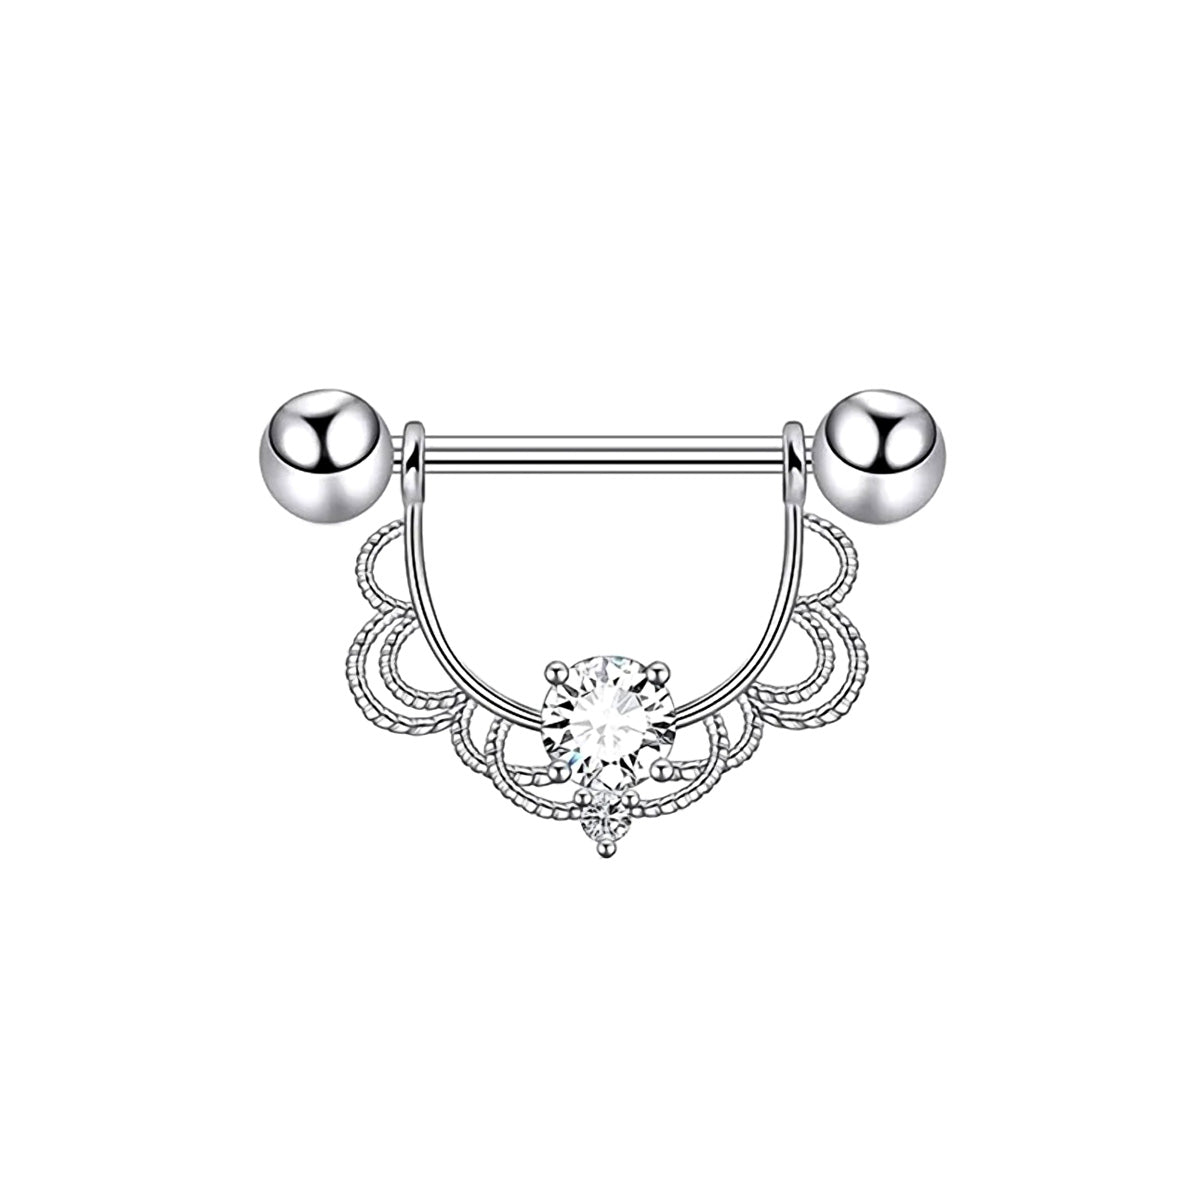 Decorative nipple bracelet with pendant (Steel 316L)